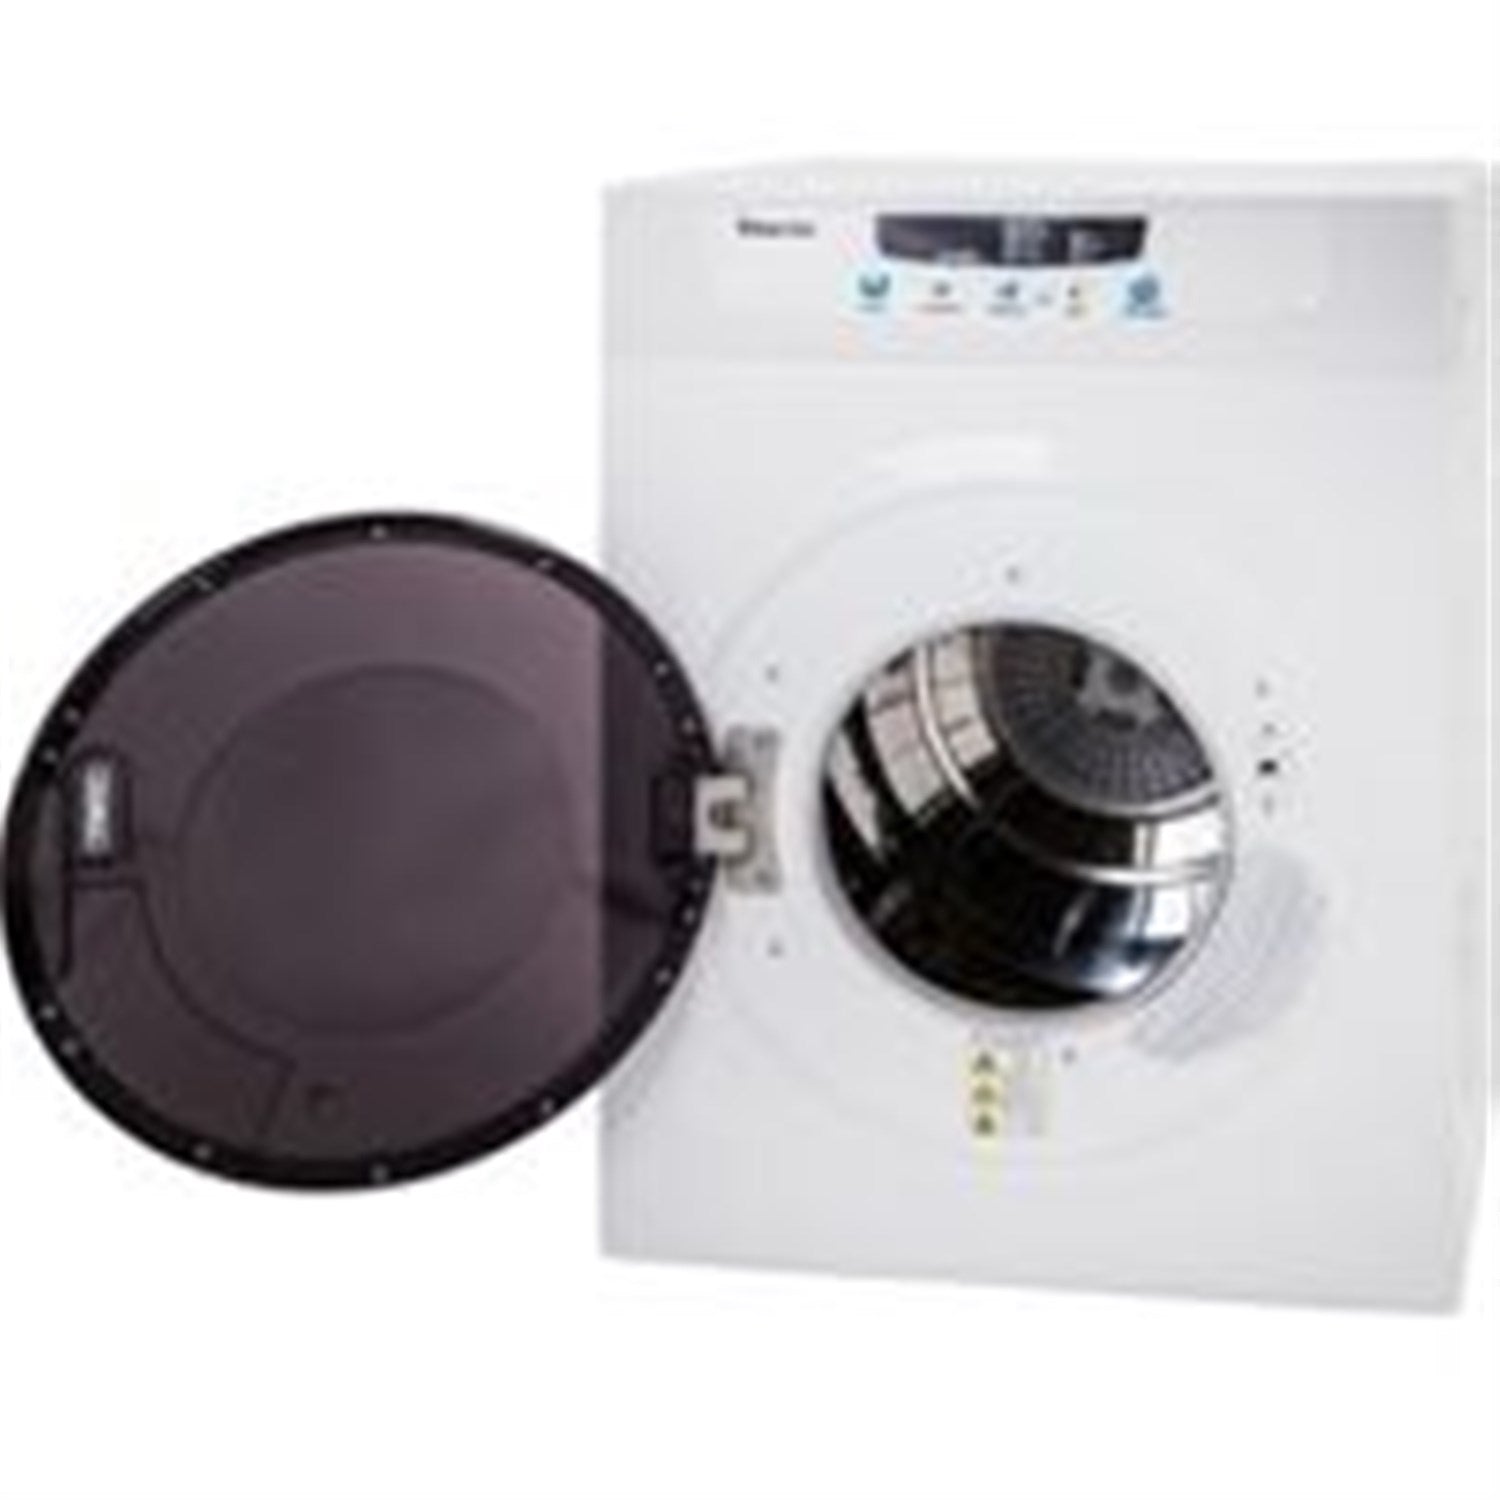 Magic Chef - 3.5 Cu Ft Compact Dryer | MCSDRY35W